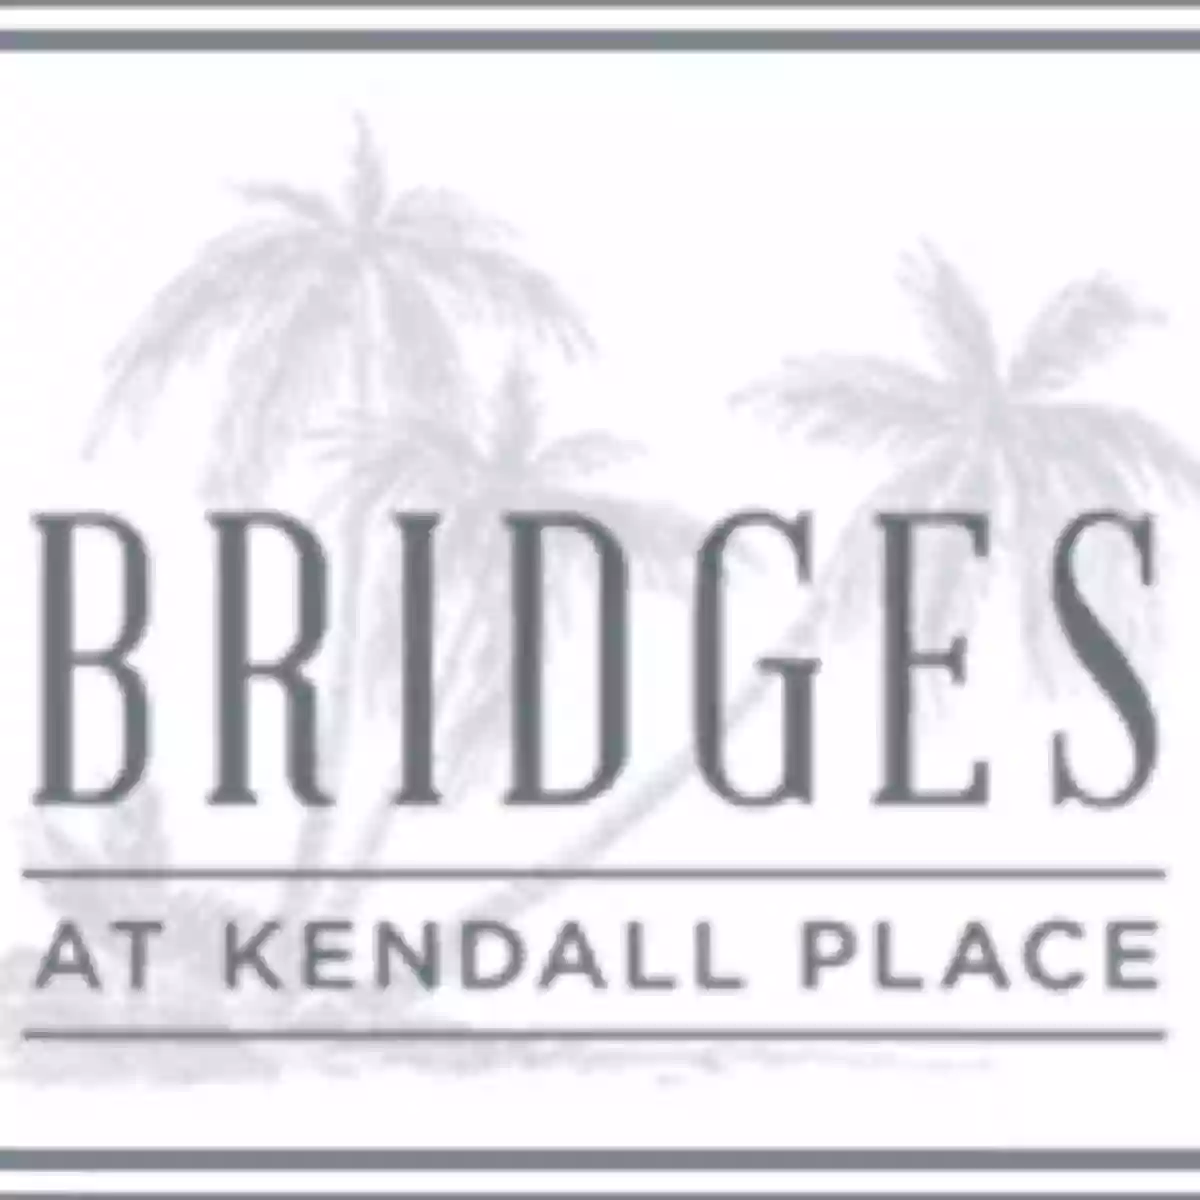 Bridges at Kendall Place